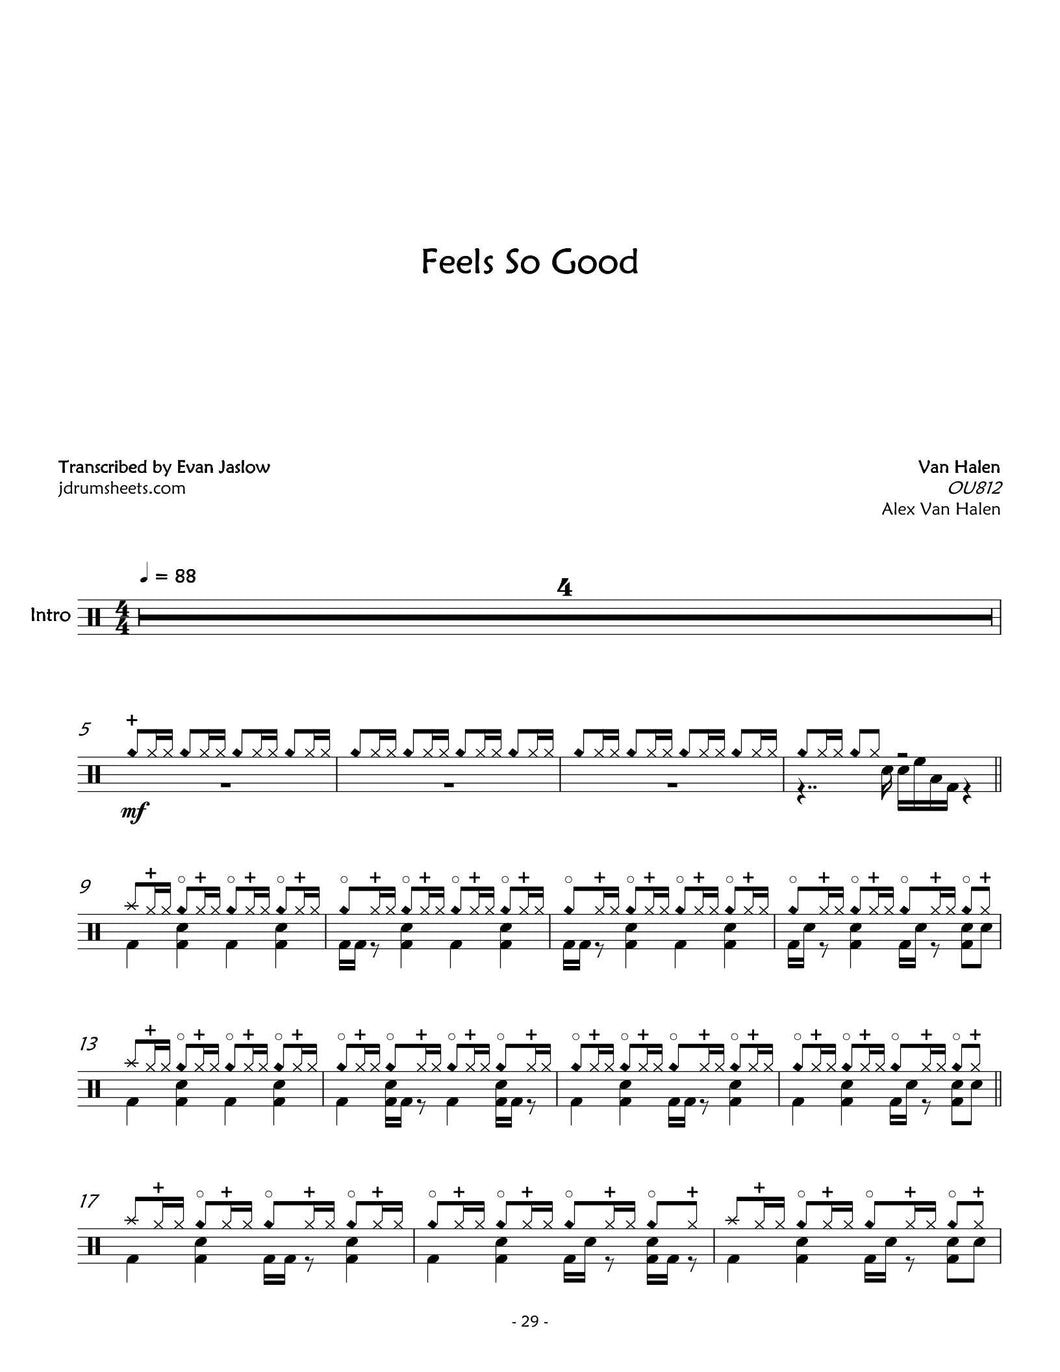 Feels So Good - Van Halen - Full Drum Transcription / Drum Sheet Music - Jaslow Drum Sheets